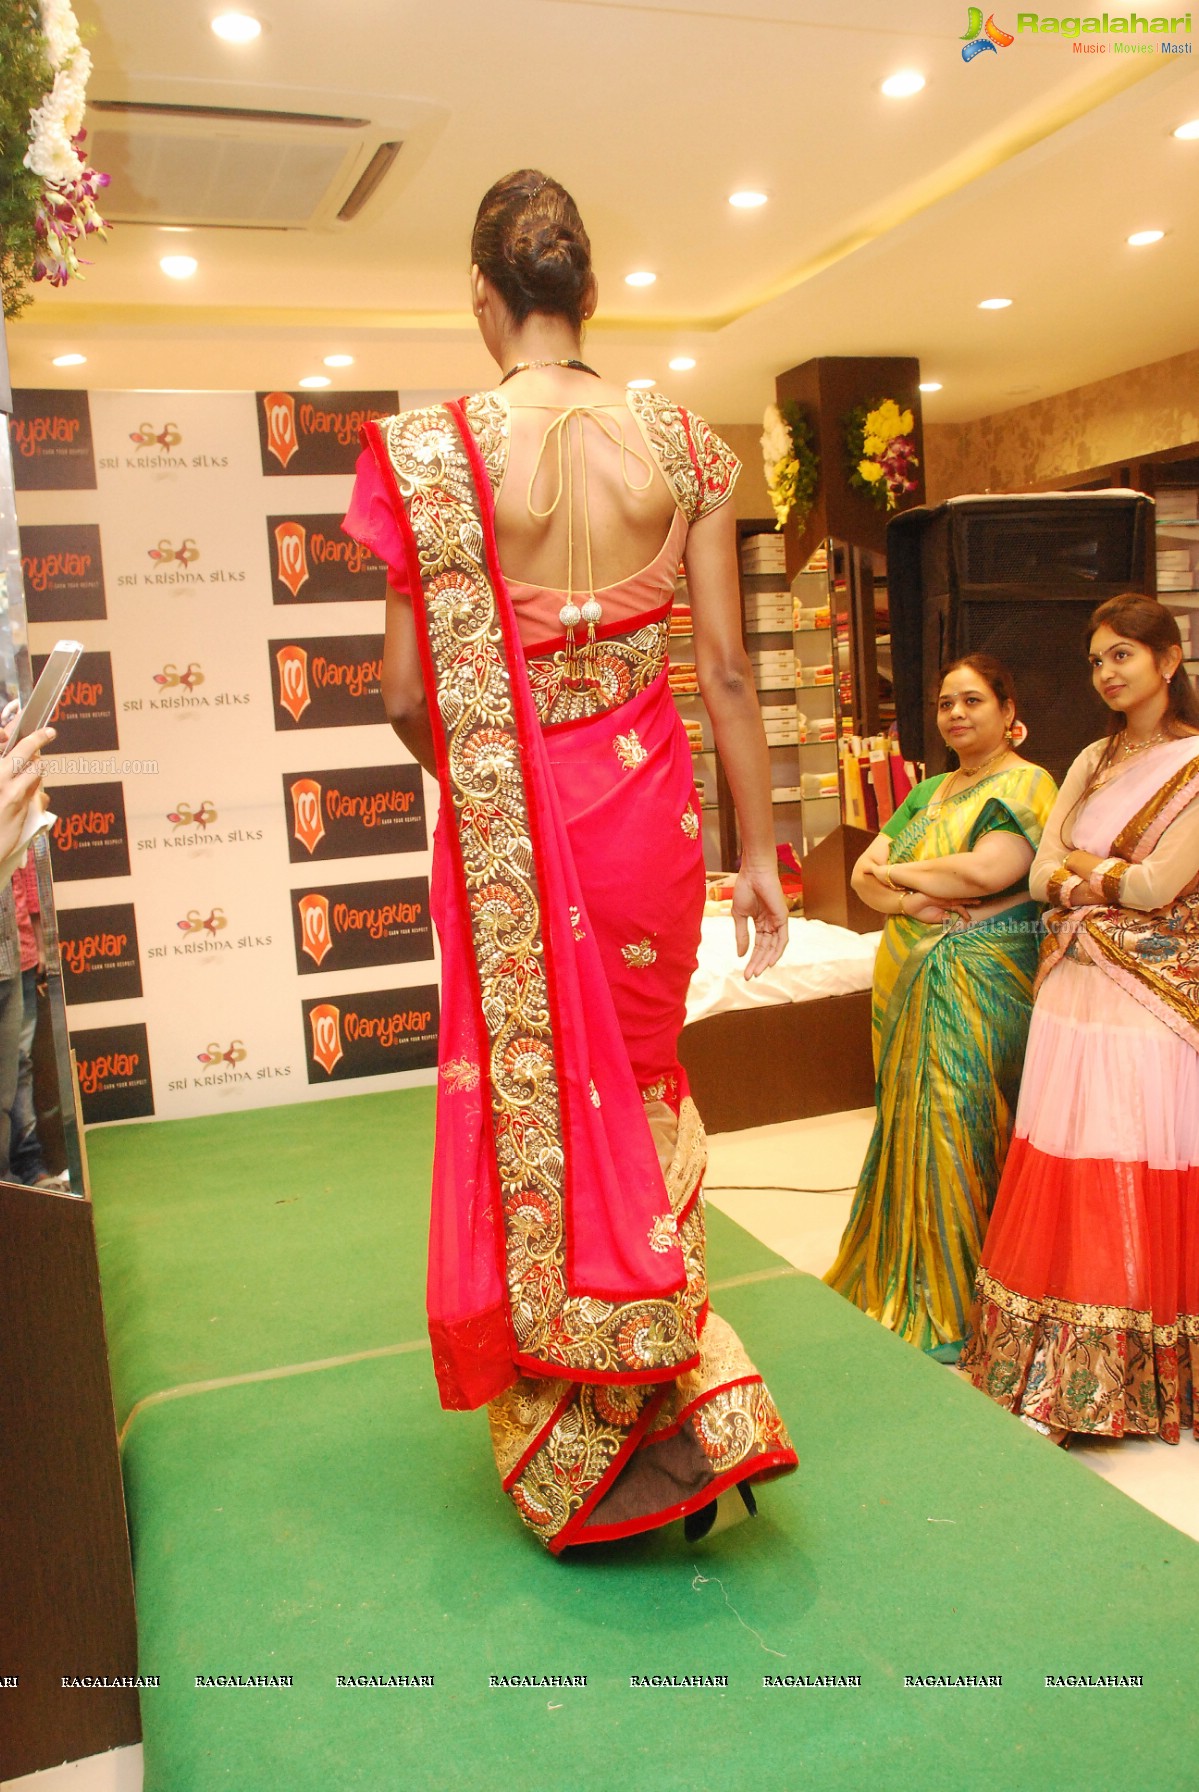 Sri Krishna Silks Launch at Kukatpally, Hyderabad